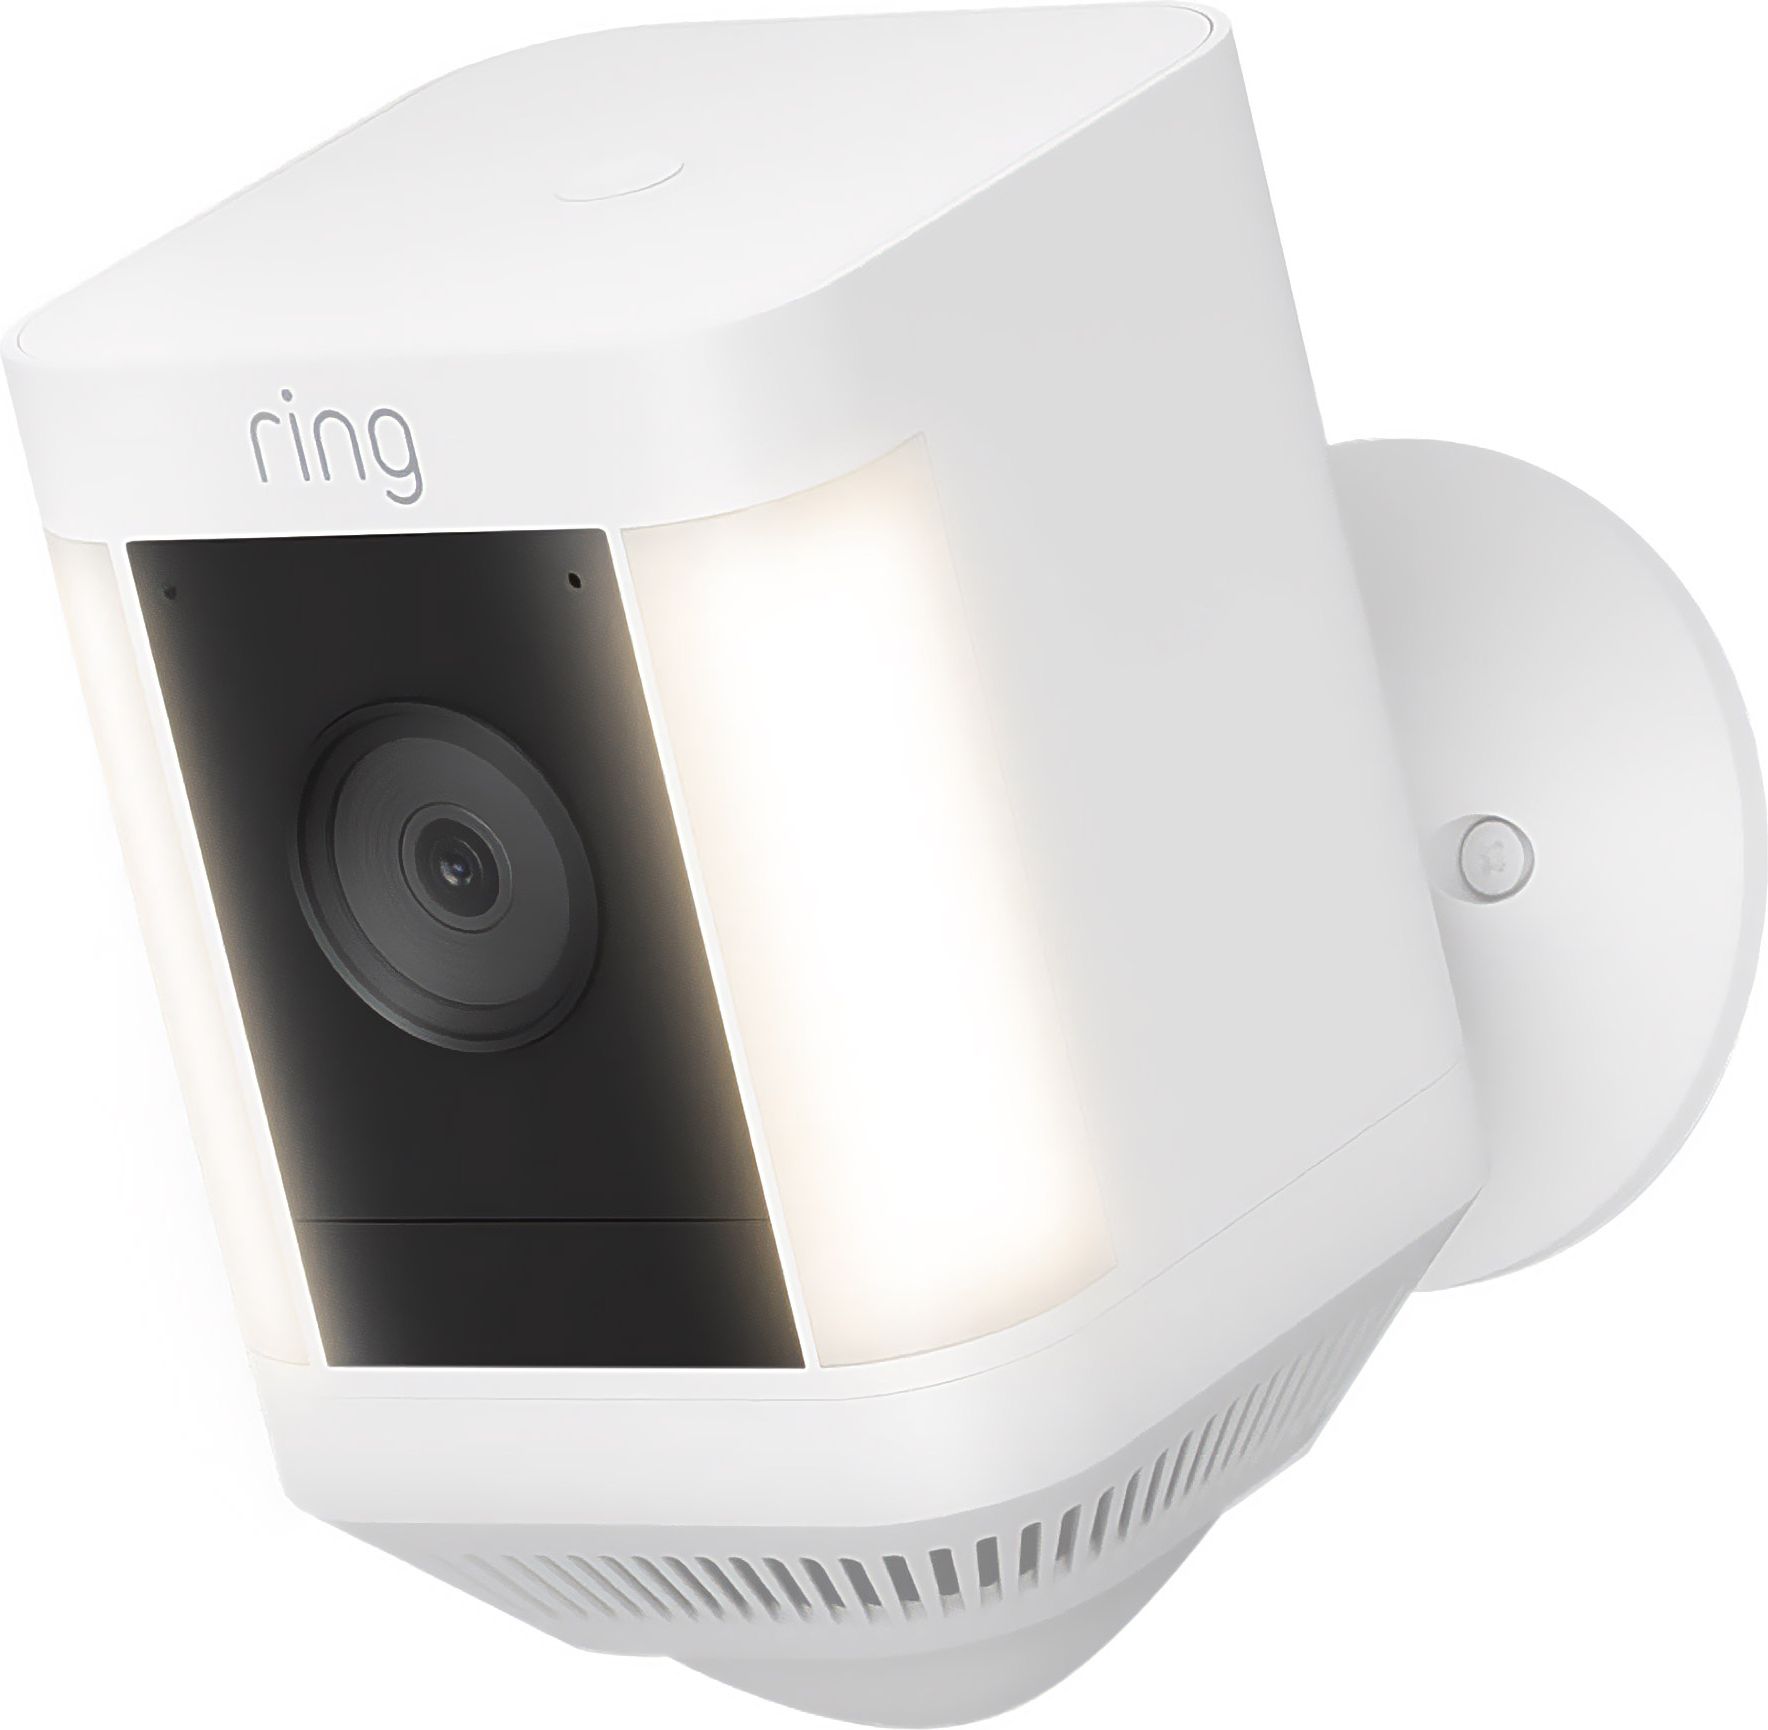 Ring Battery Powered Spotlight Cam Plus Full HD 1080p Smart Home Security Camera - White, White